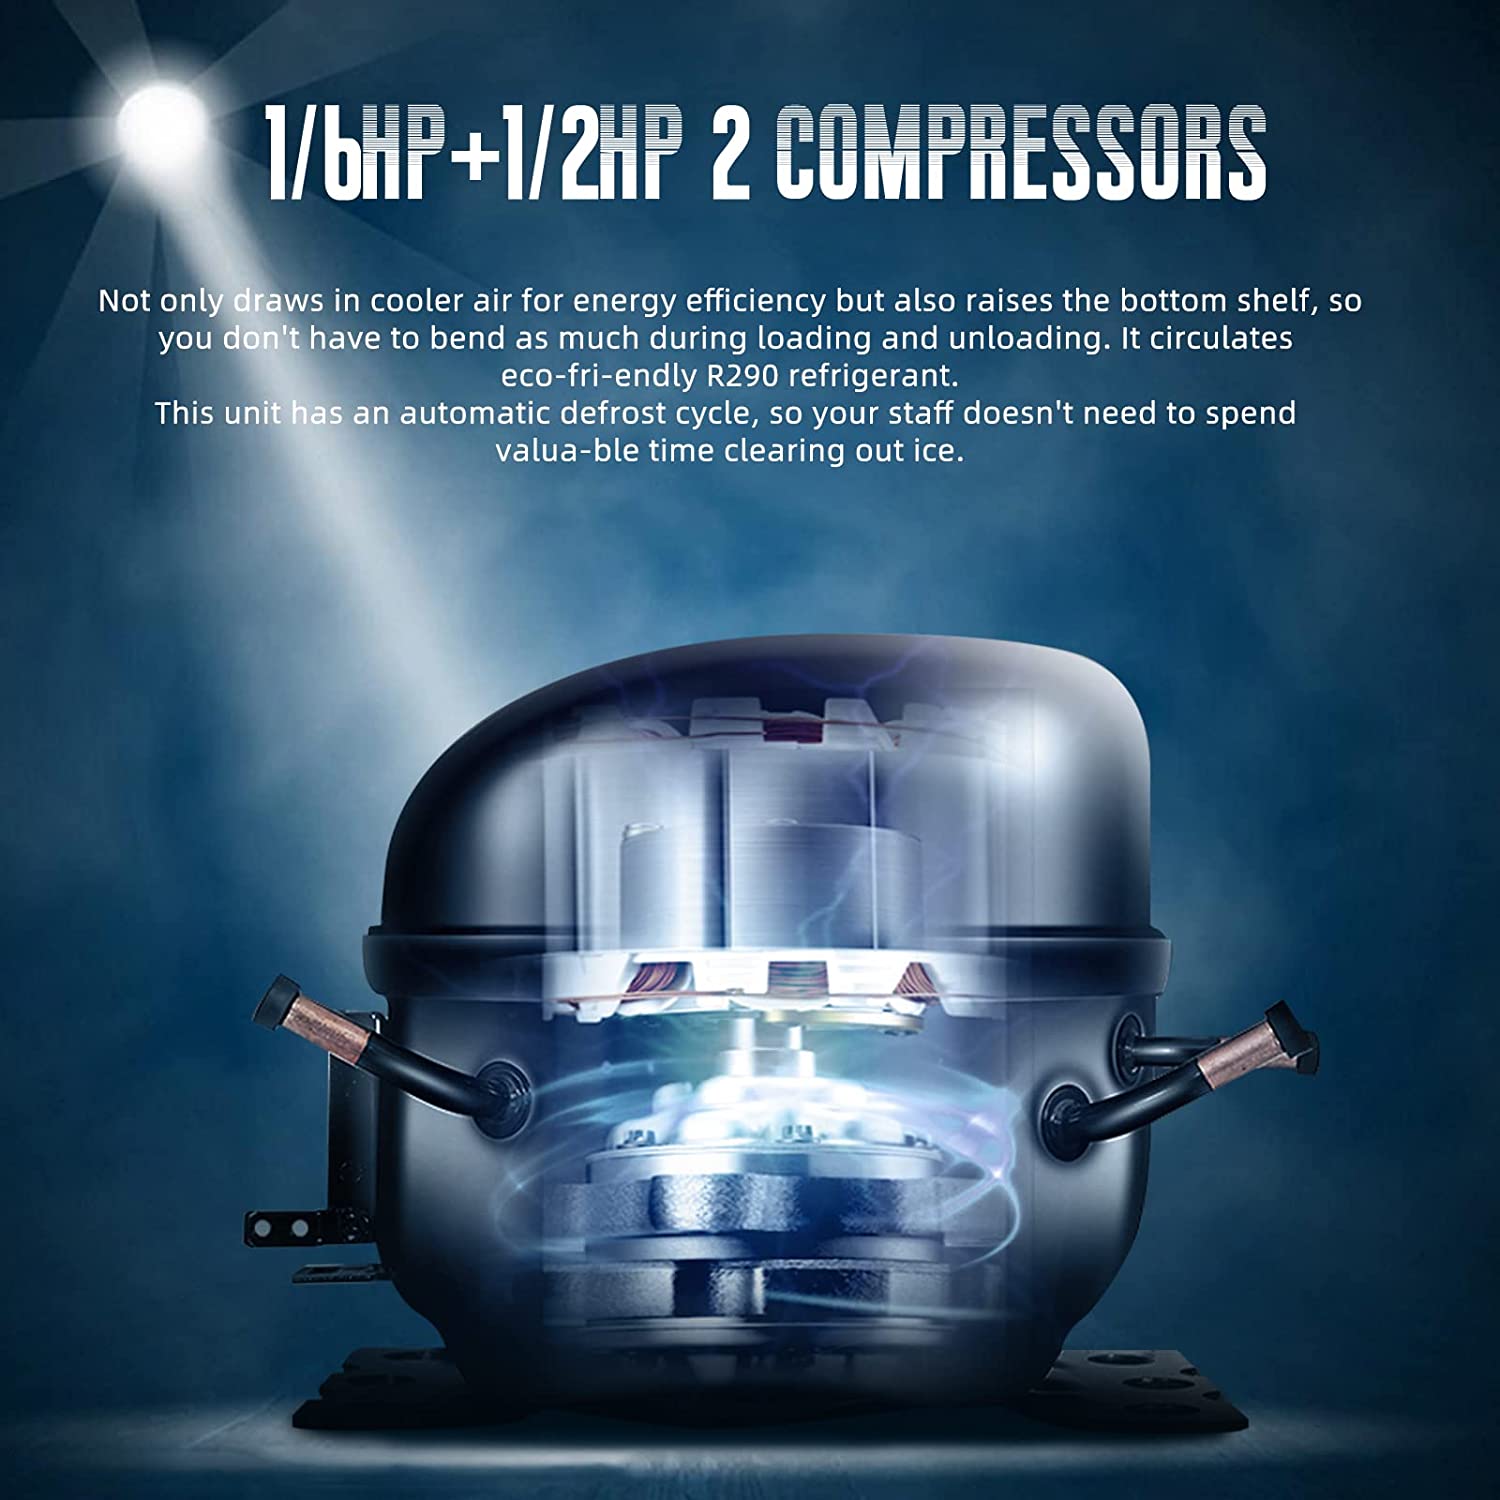 2 Compressors